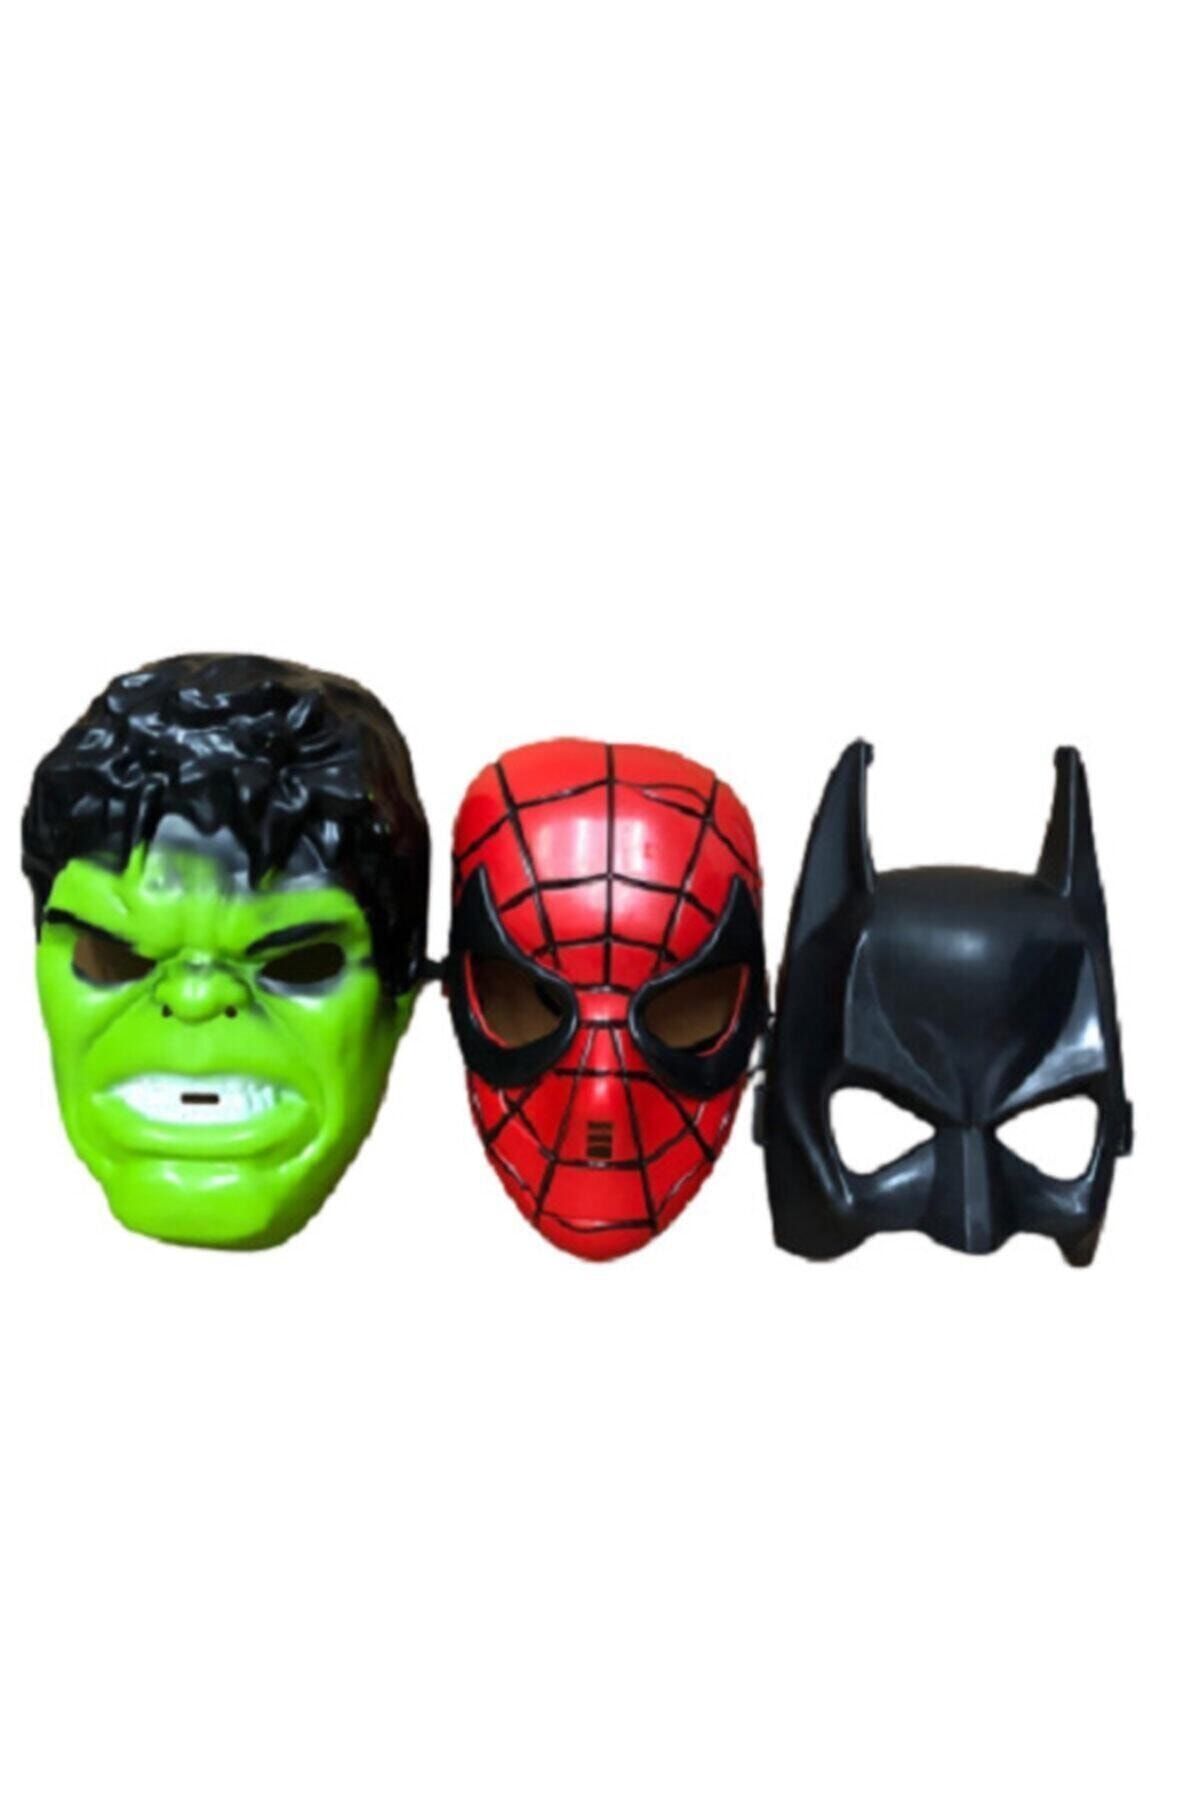 AVENGERS Spiderman Örümcek Adam Batman Hulk Maske 3 Lü Süper Set